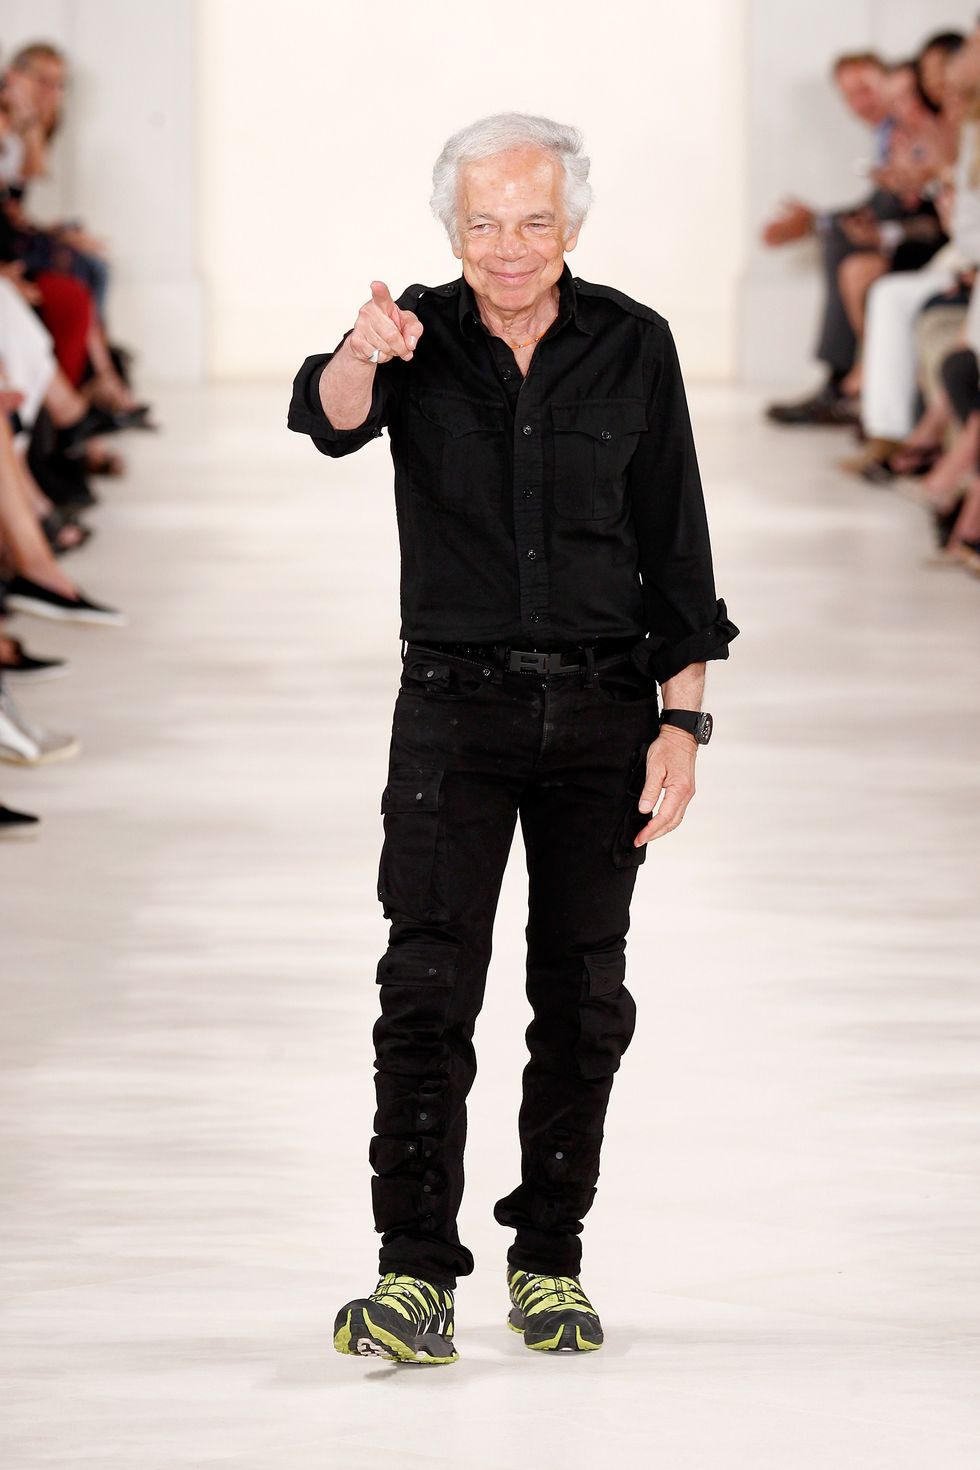 Ralph Lauren on the runway at Fashion Week